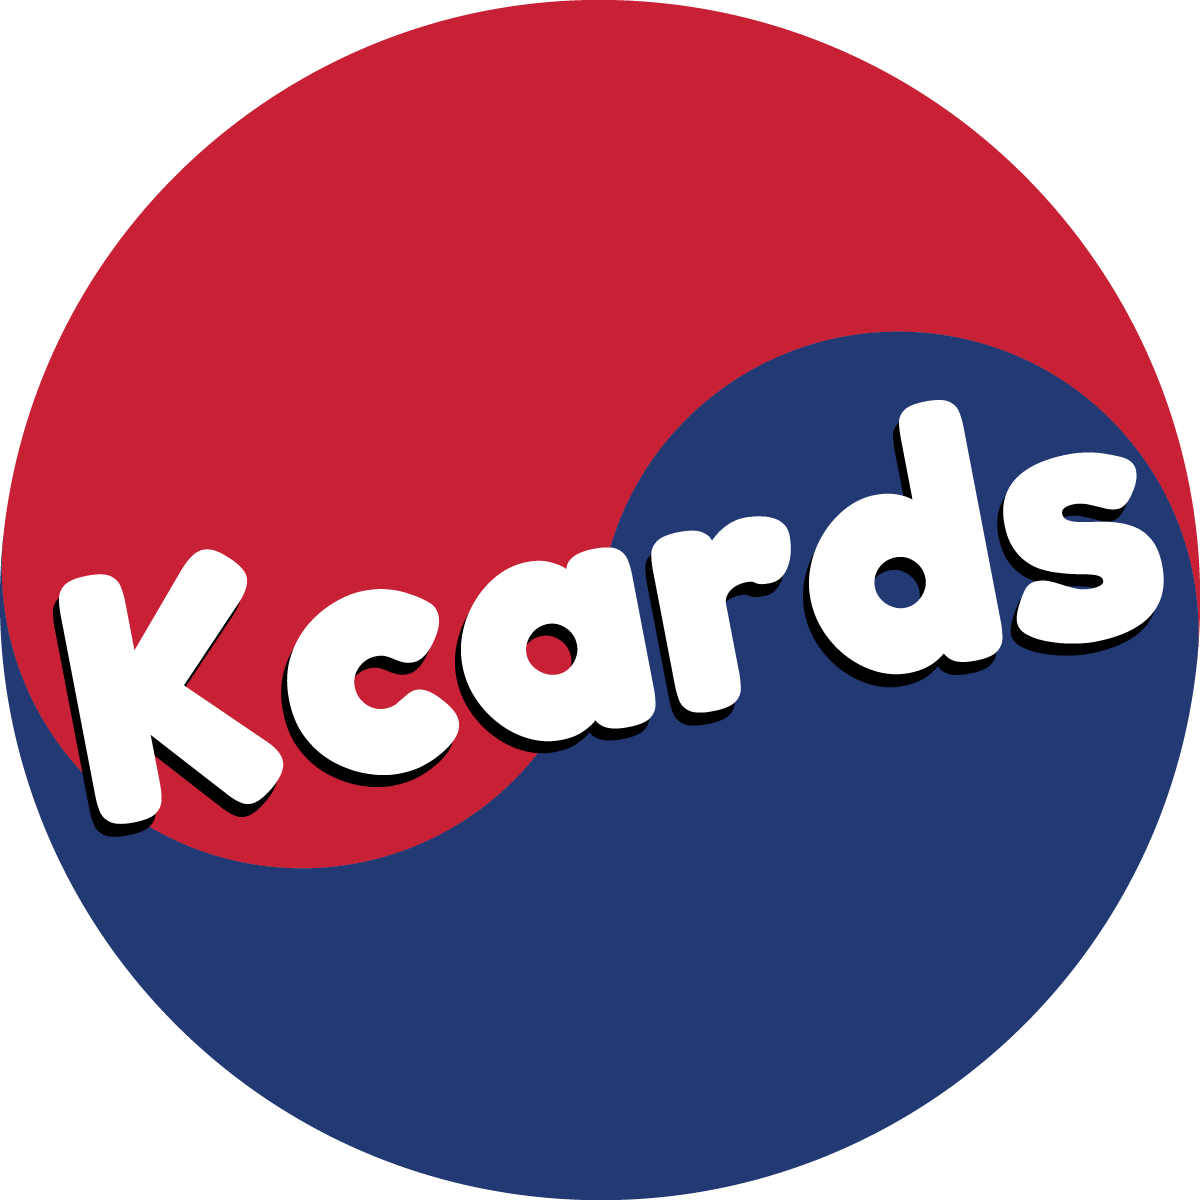 Kcards app logo